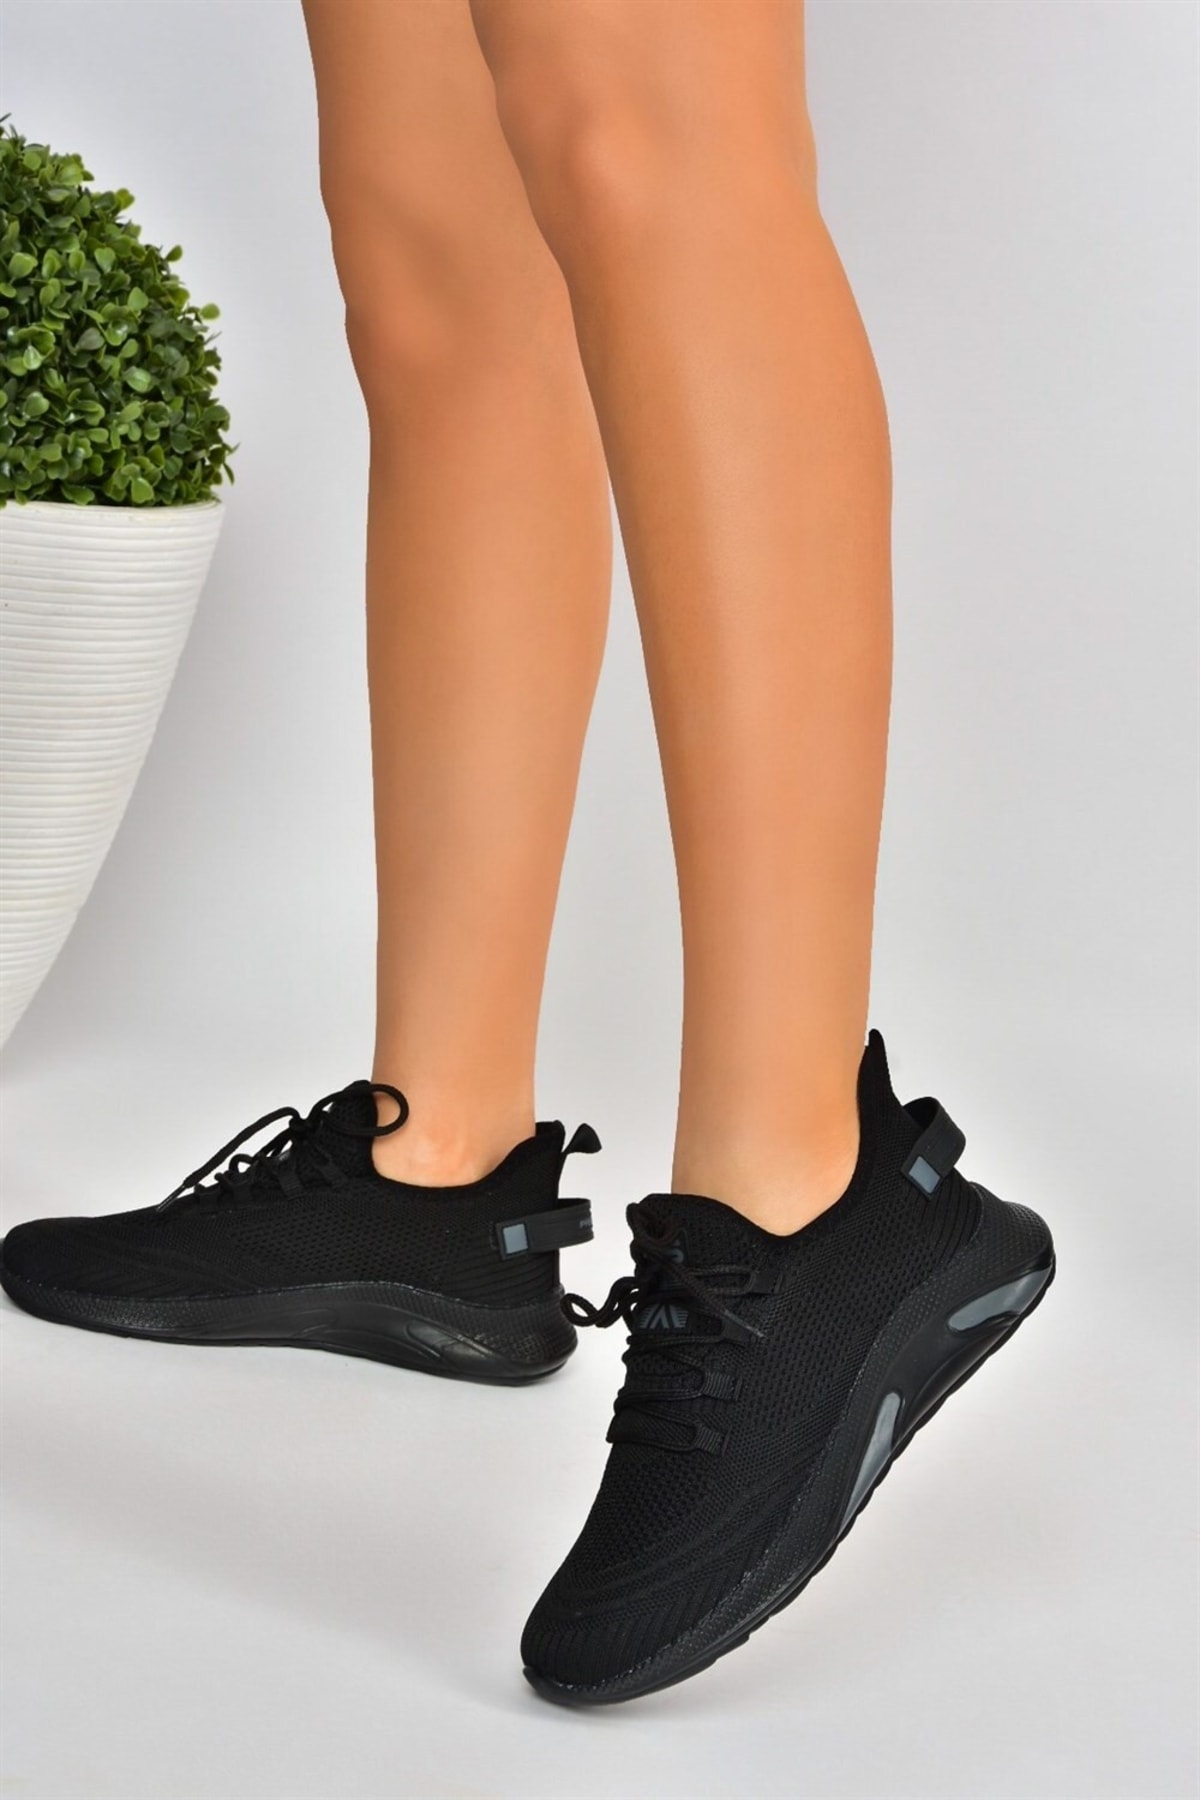 Fox Shoes Black Knitwear Fabric Women's Sports Shoes